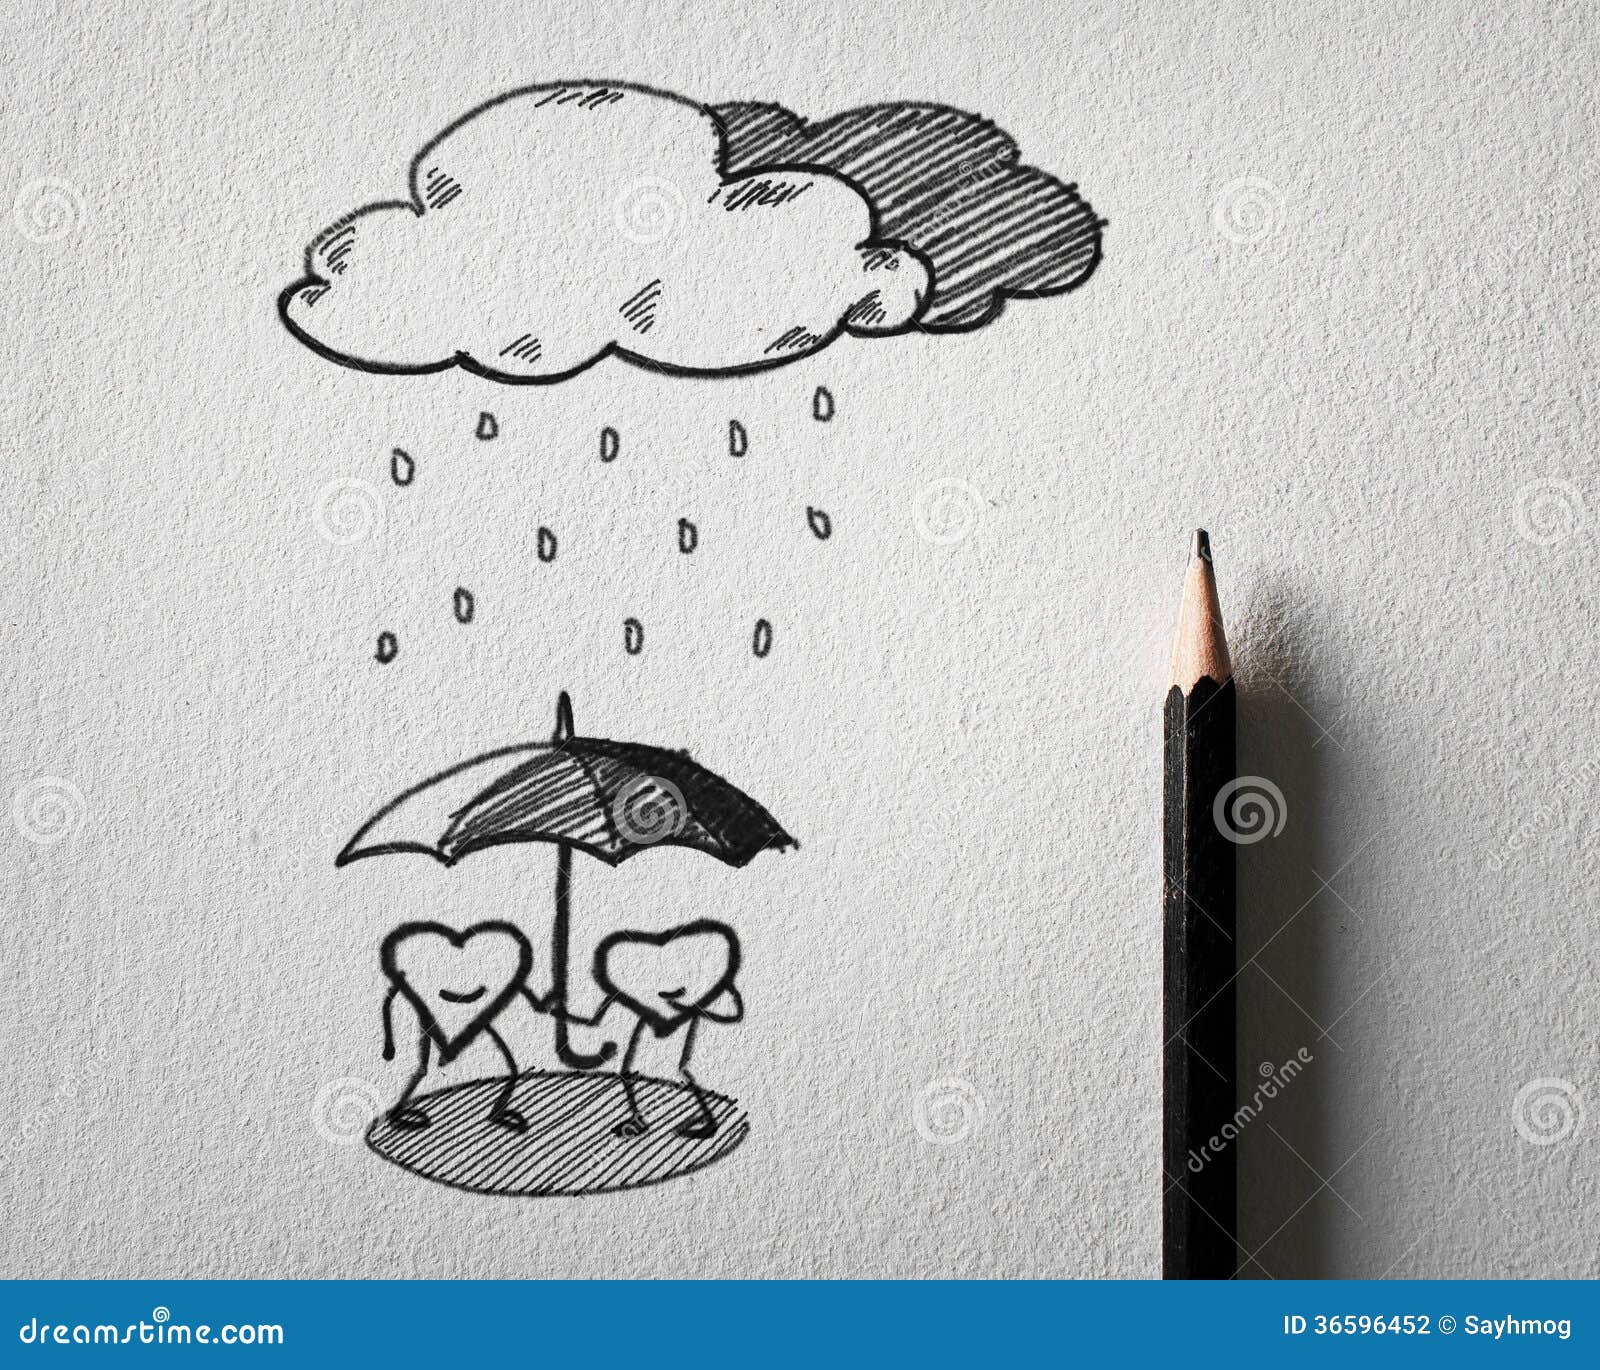 How to draw a rainy day scenery /Rainy season drawing step by step - YouTube